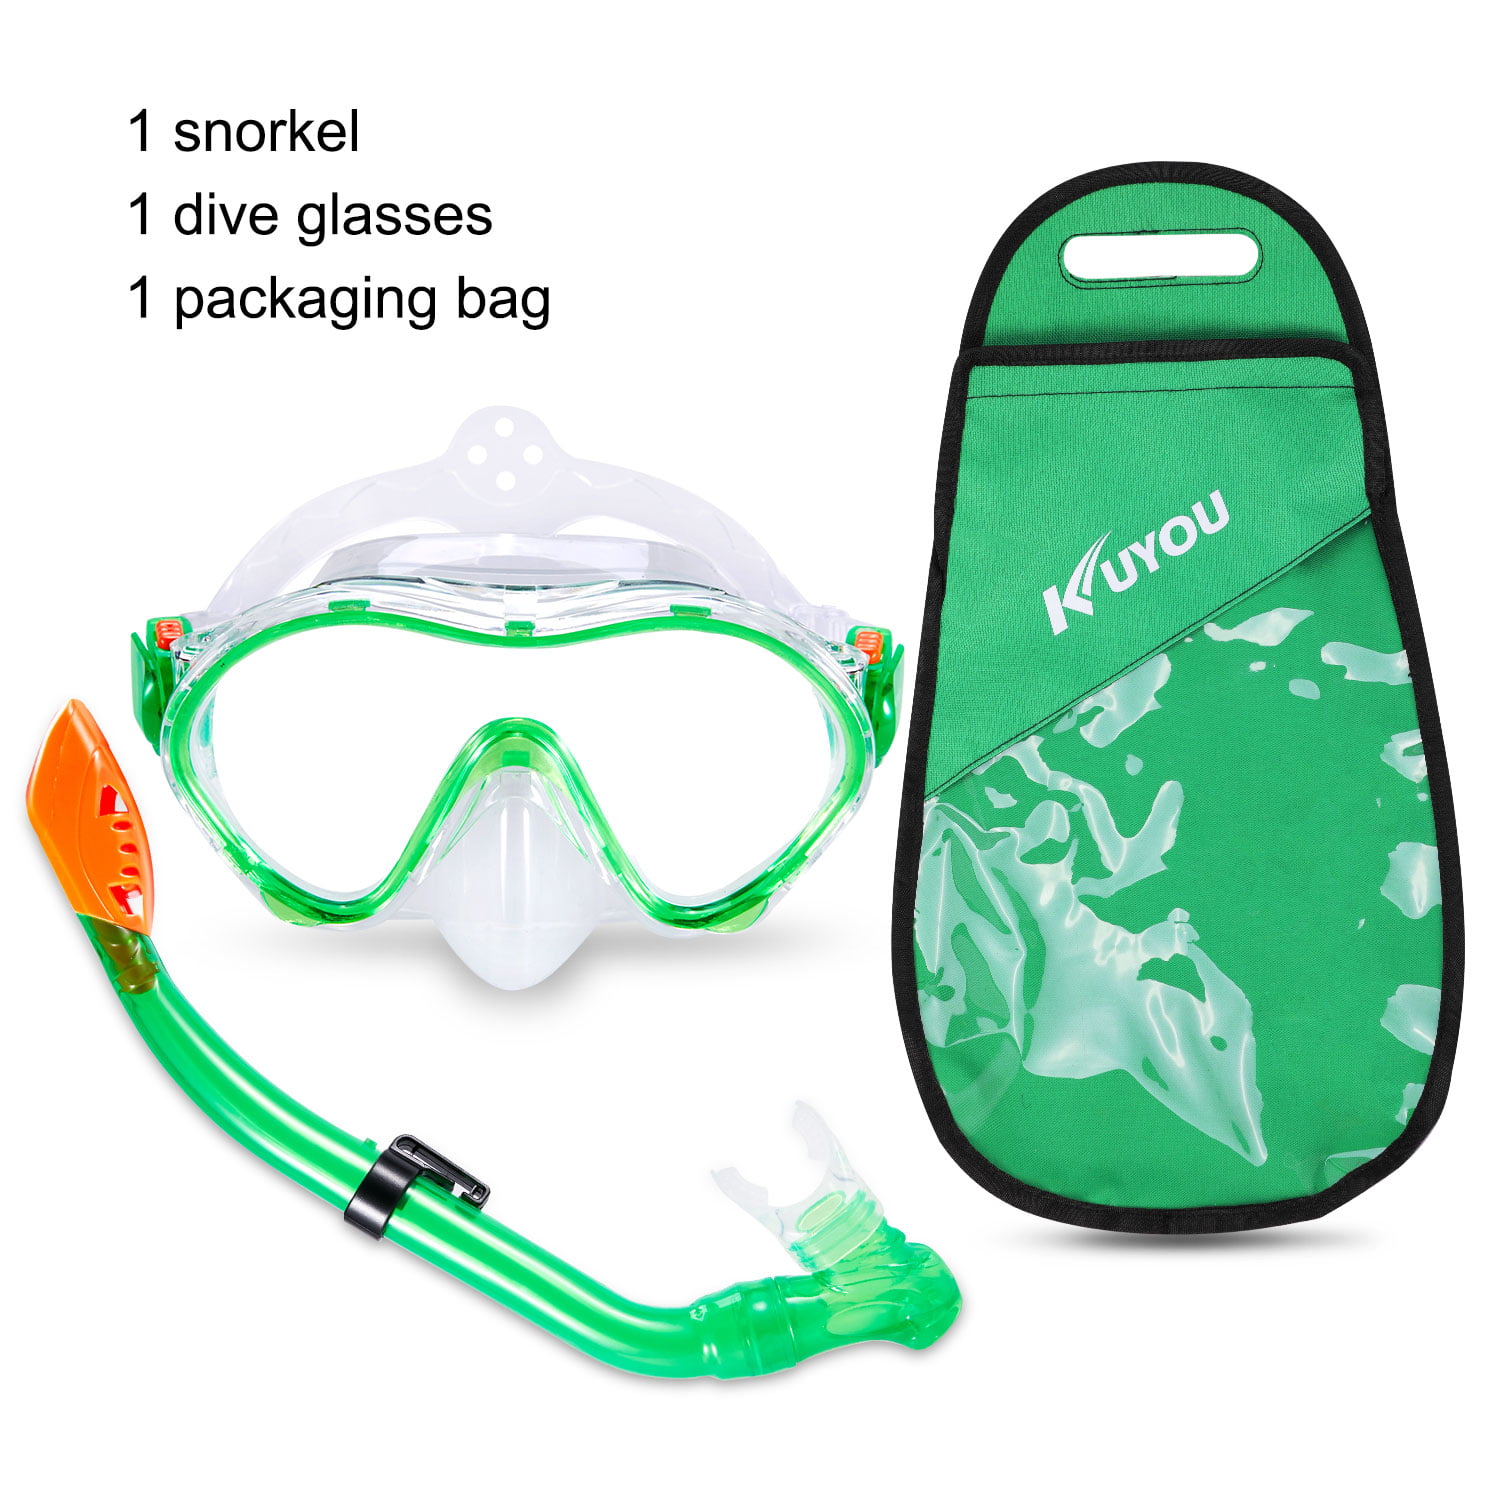 KUYOU Snorkel Set for Kids,Dry Top Snorkel Mask Anti-Fog and Anti-Leak Easy Adjustable Snorkeling Gear for Children Boys & Girls,Juniors Freediving Gear Set Age 5. 